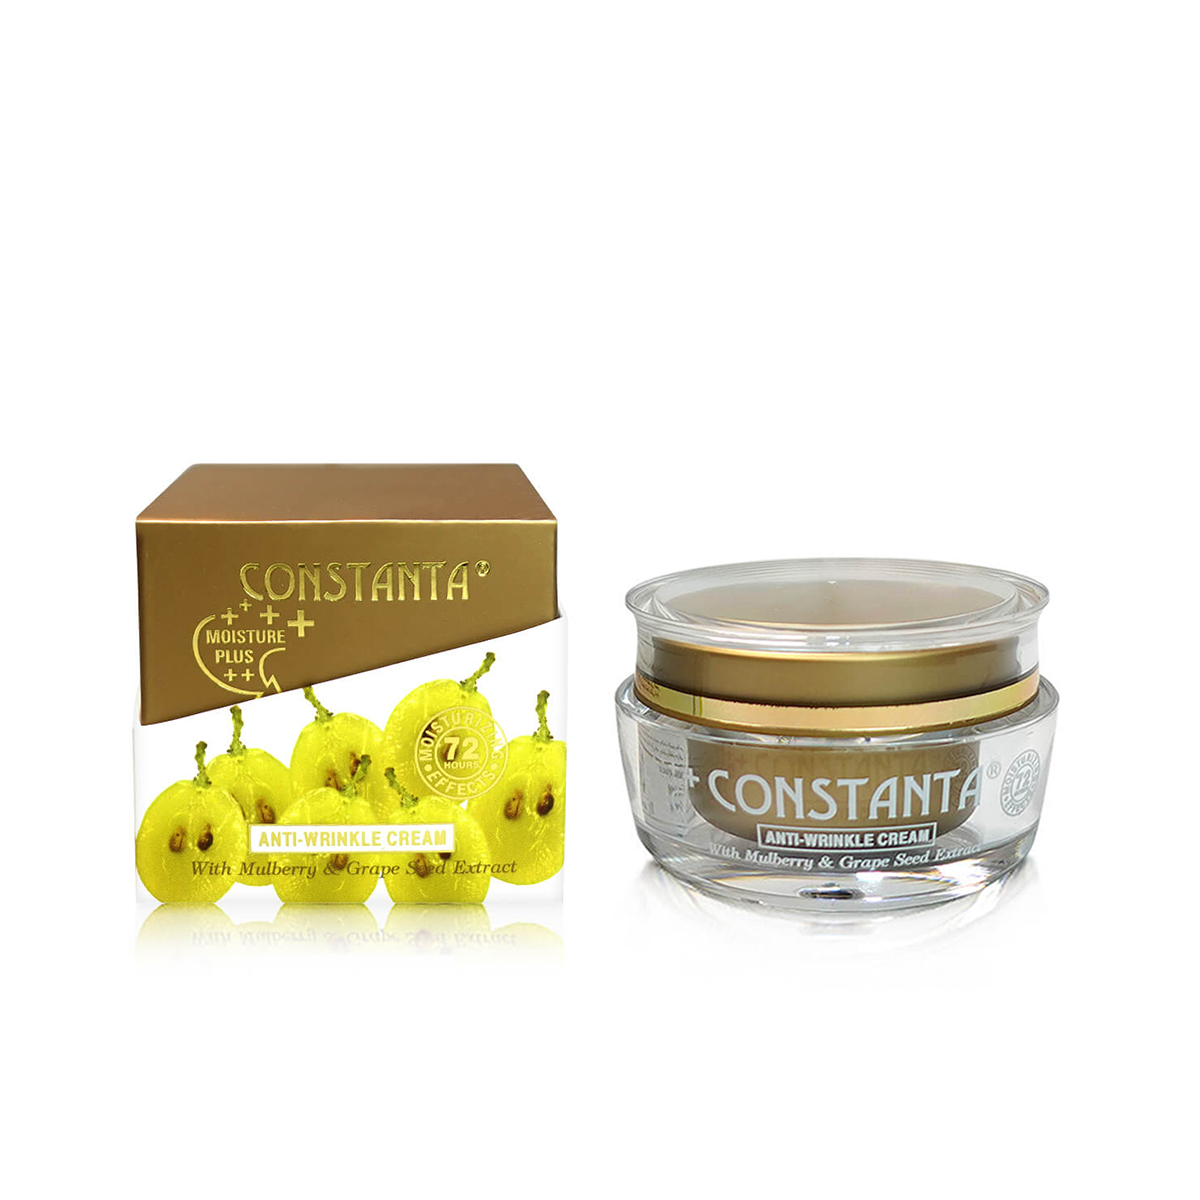 6-4043375054502-CT-118 -Constanta Facial Lifting Anti Wrinkle Cream 30g-1